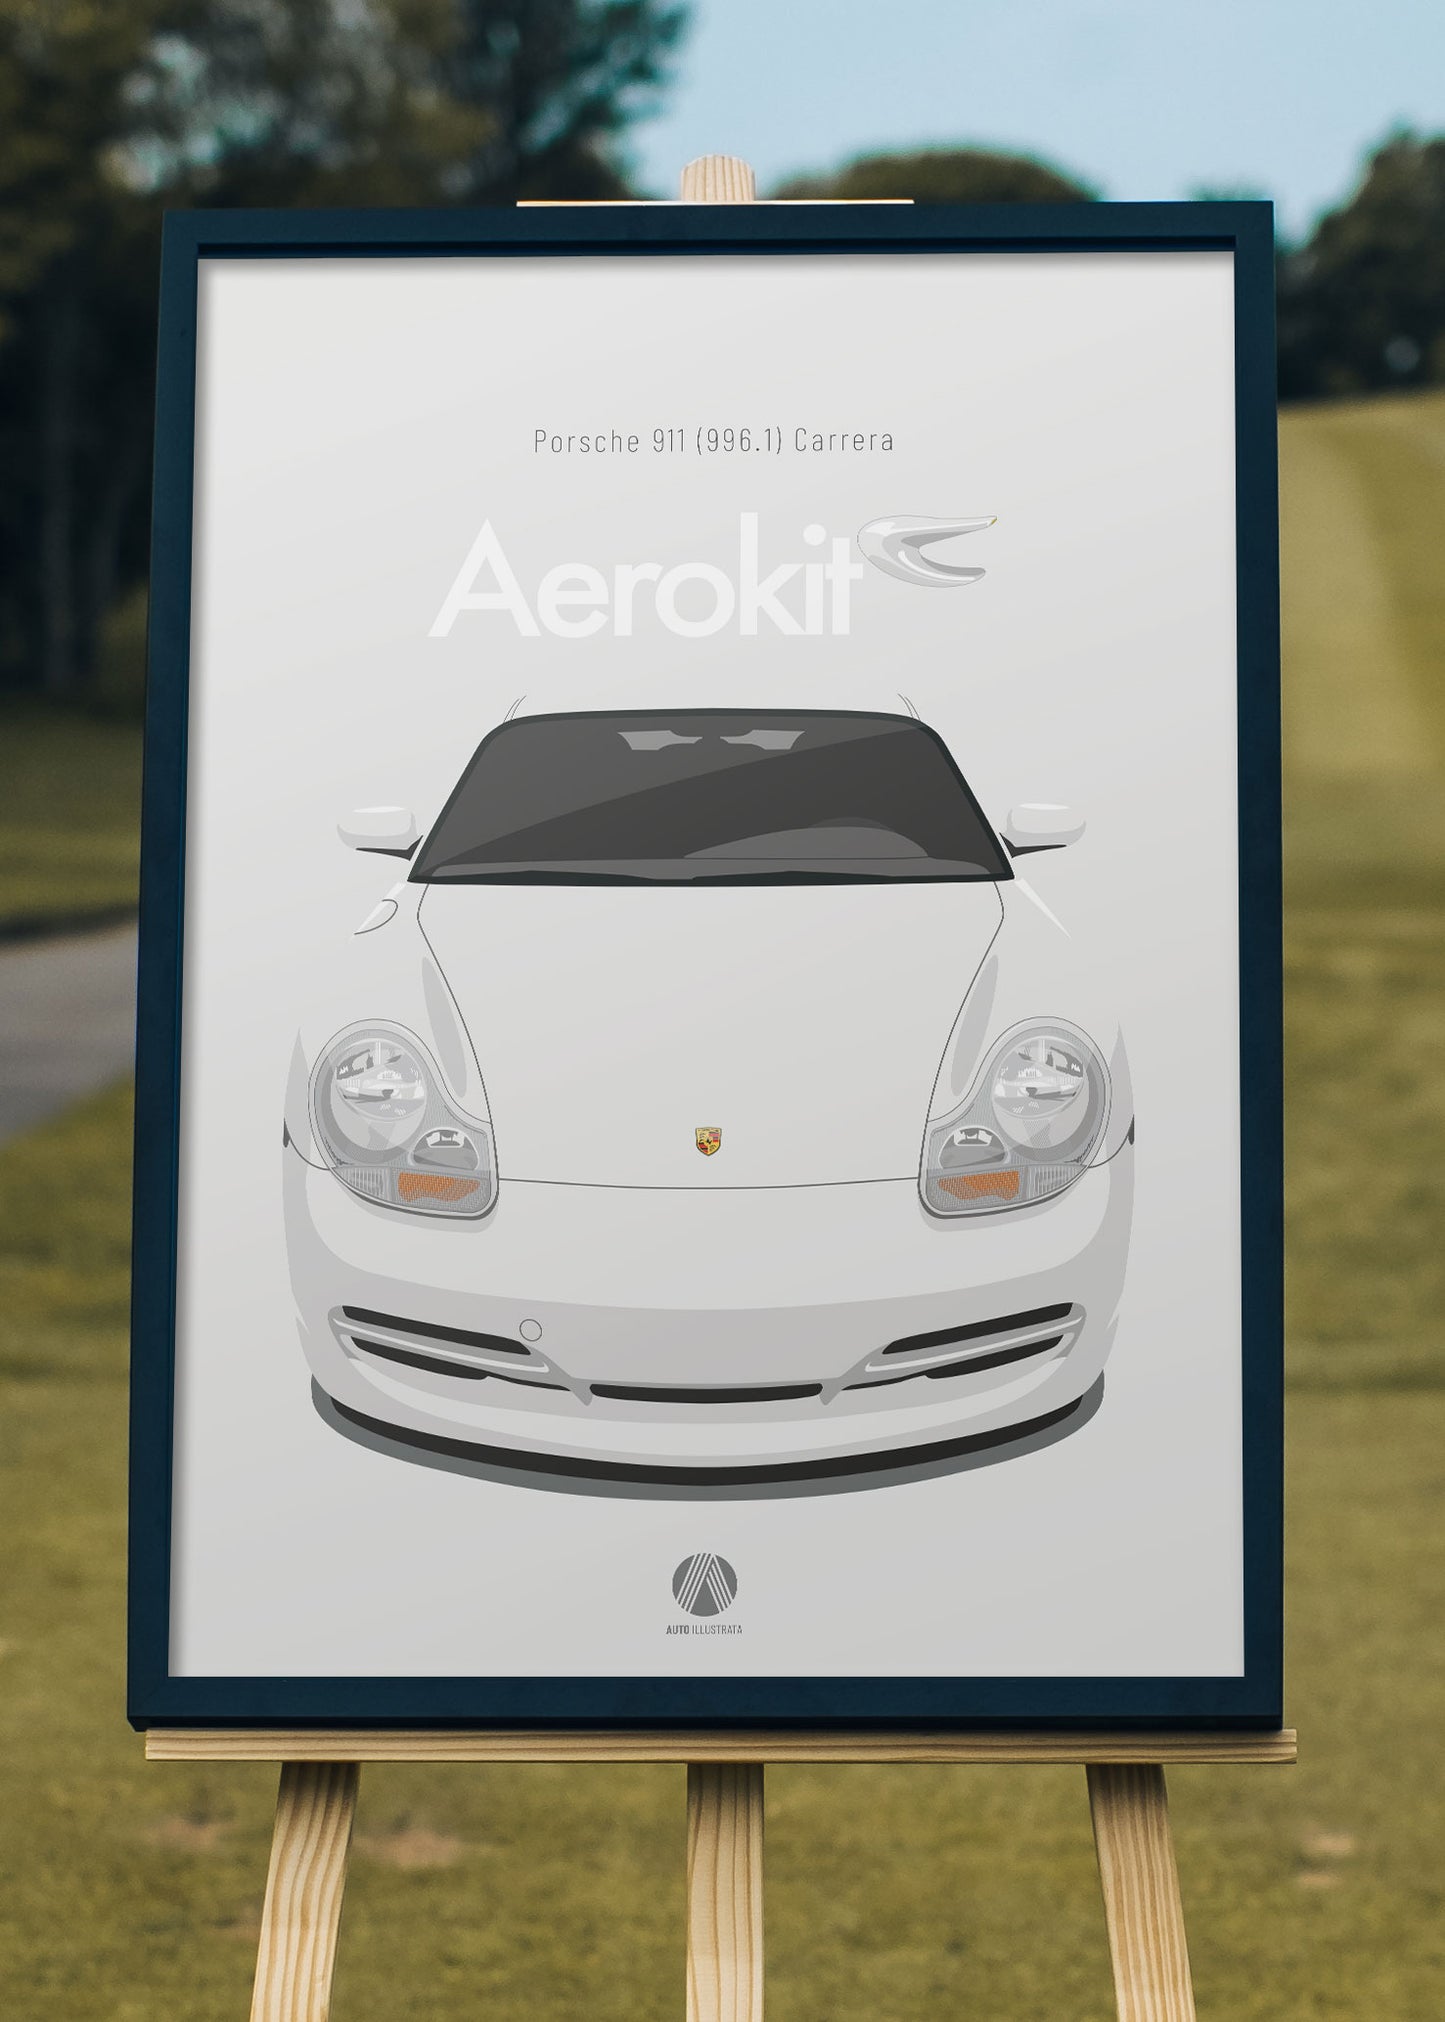 1997 Porsche 911 (996.1) Carrera Aerokit - Carrara White - poster print